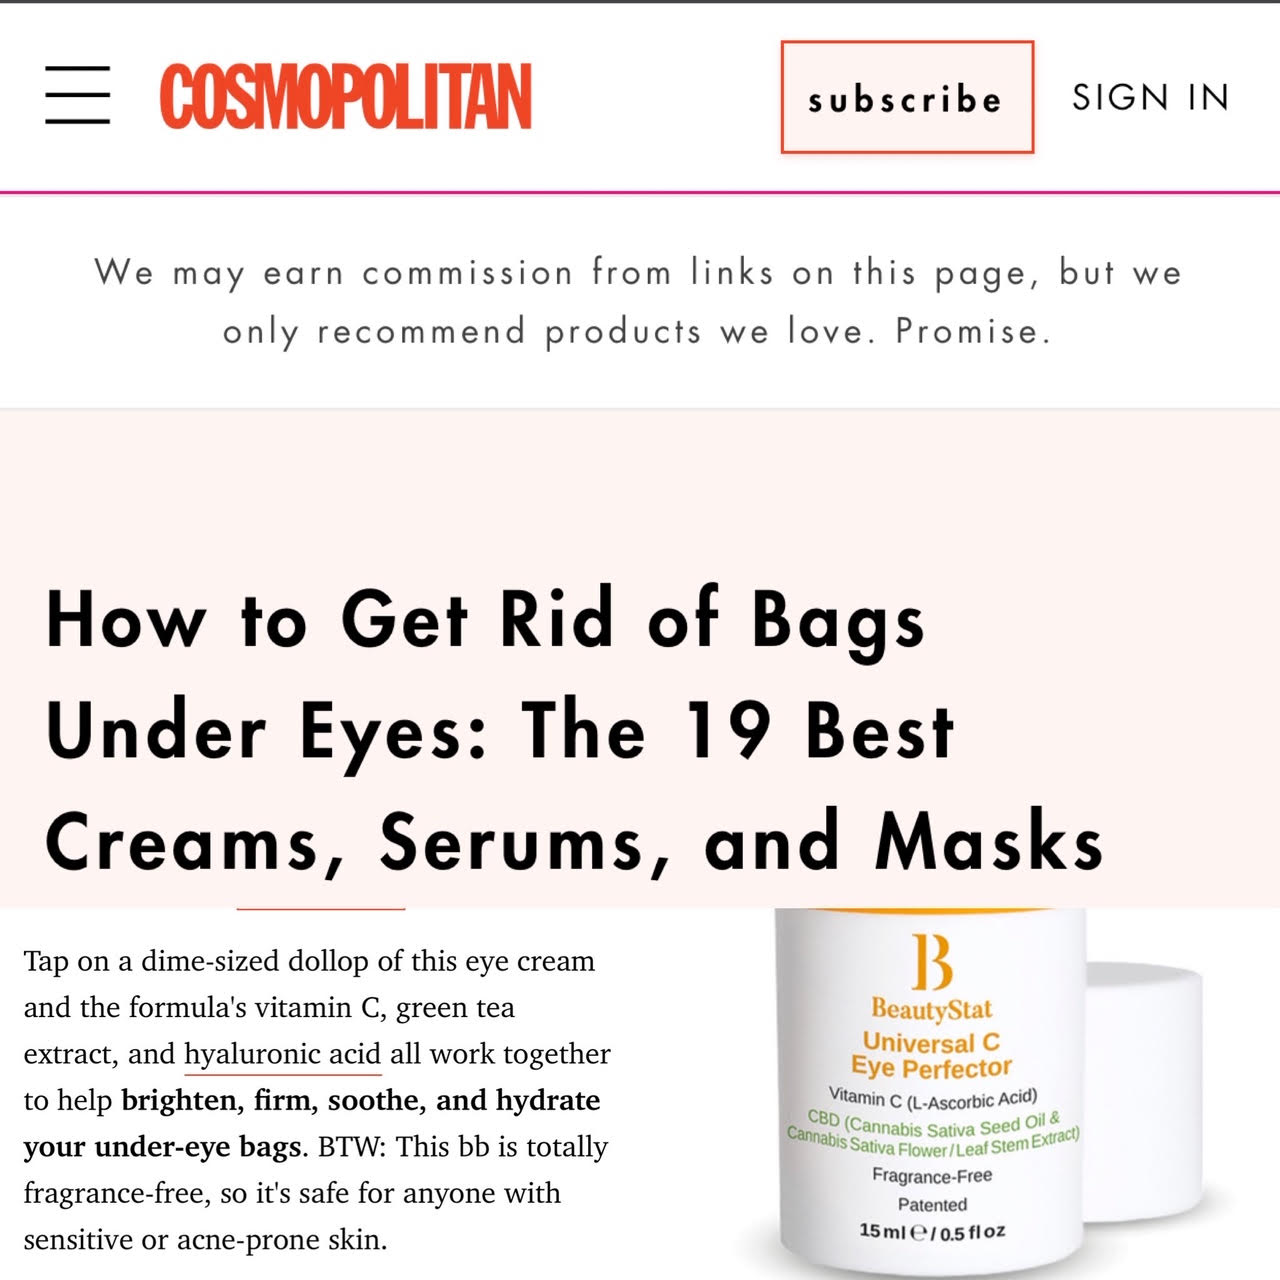 Cosmopolitan Names Universal C Eye Perfector Cream Best For Dark Circles, Wrinkles, Bags, Puffiness